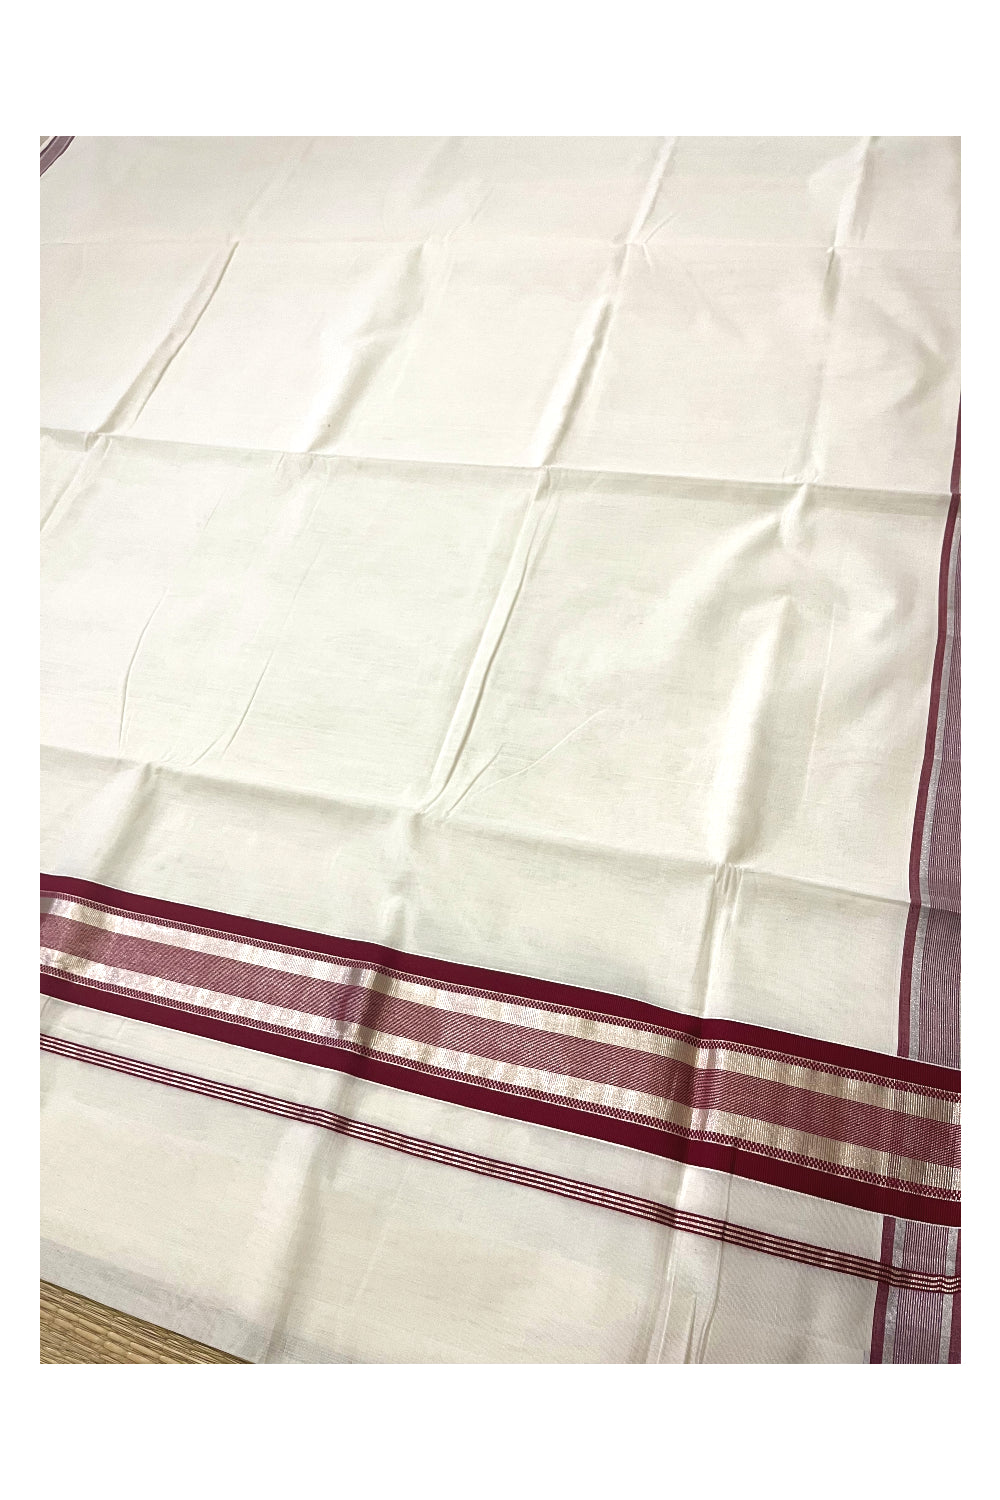 Southloom Premium Handloom Cotton Saree with Silver Kasavu and Maroon Border